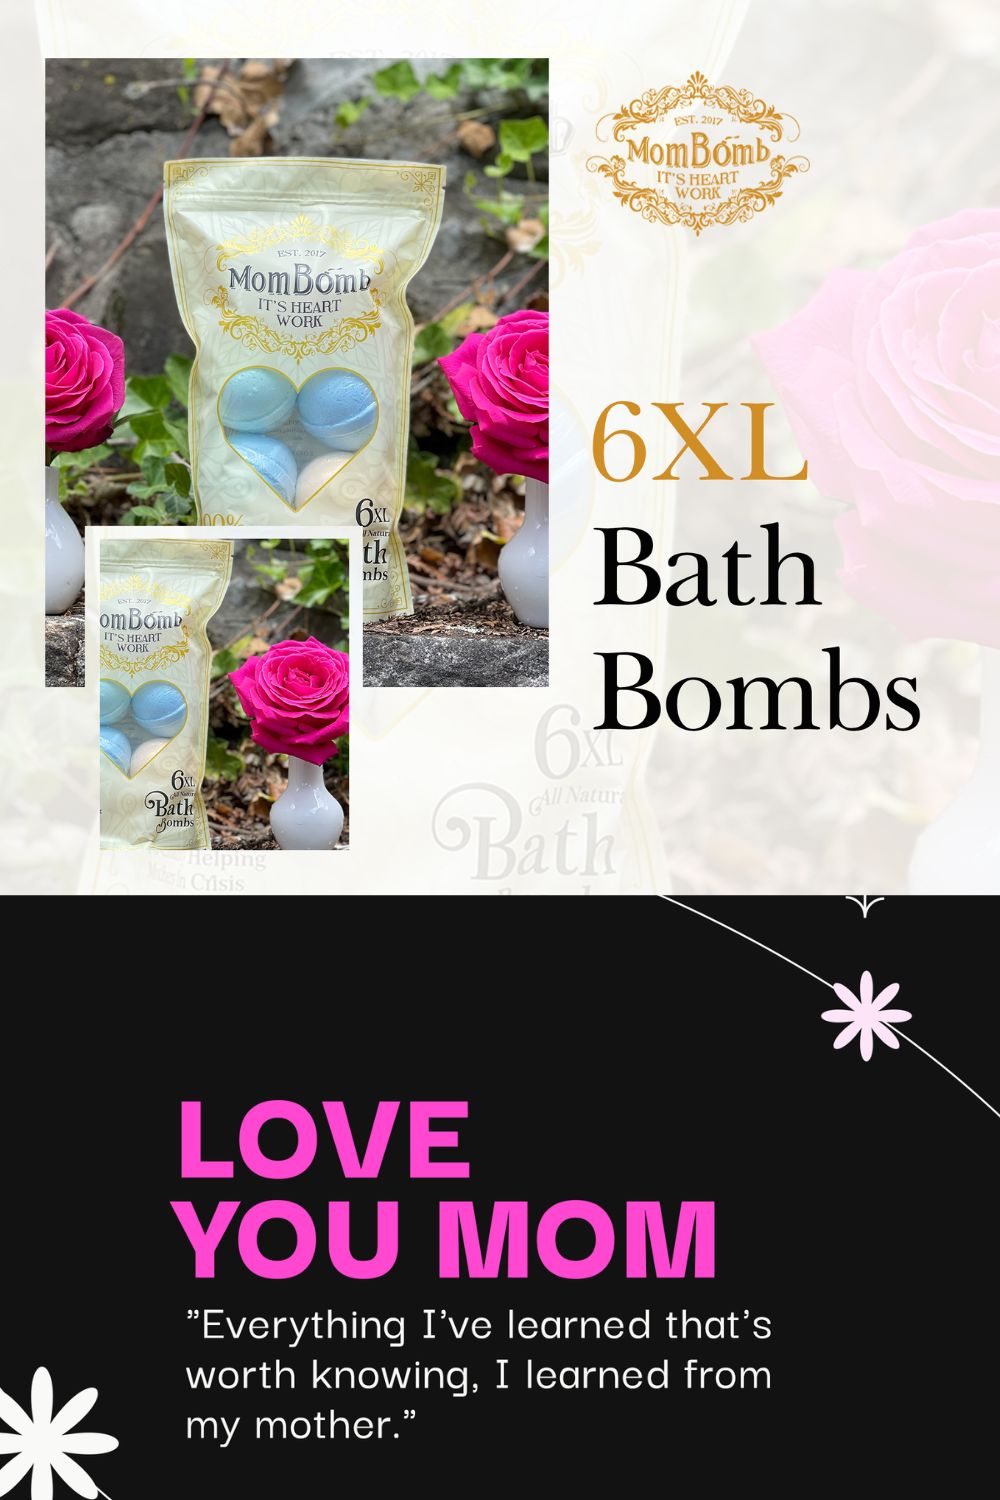 Mom Bomb ALL NATURALS in a Bag of 6 - SUBSCRIPTION - Mom Bomb